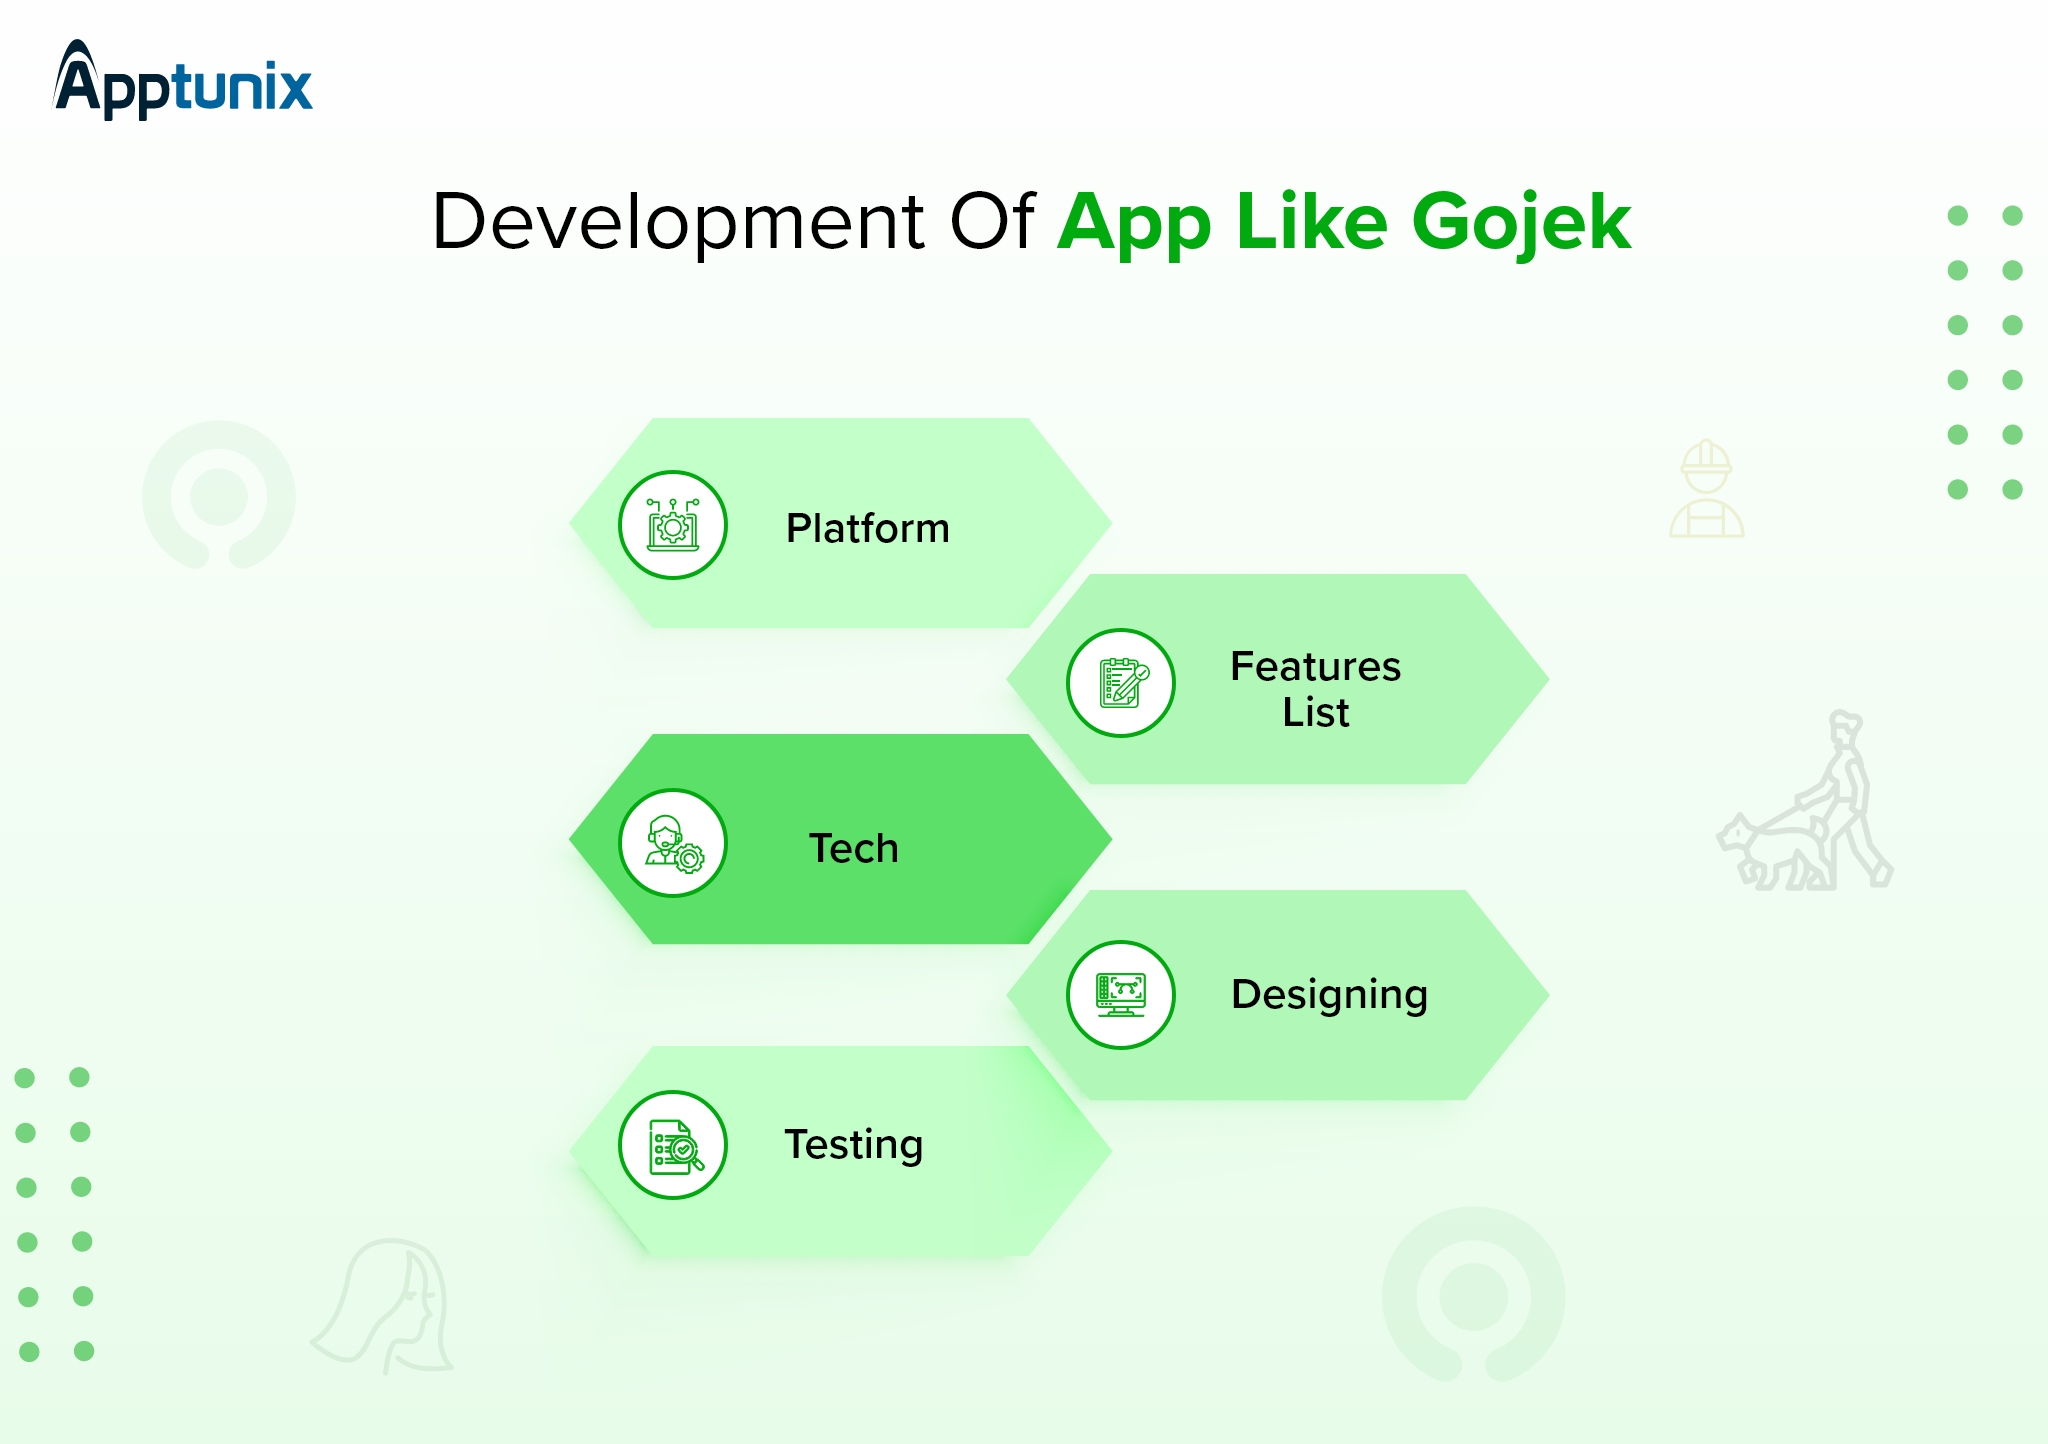 Development of app like Gojek